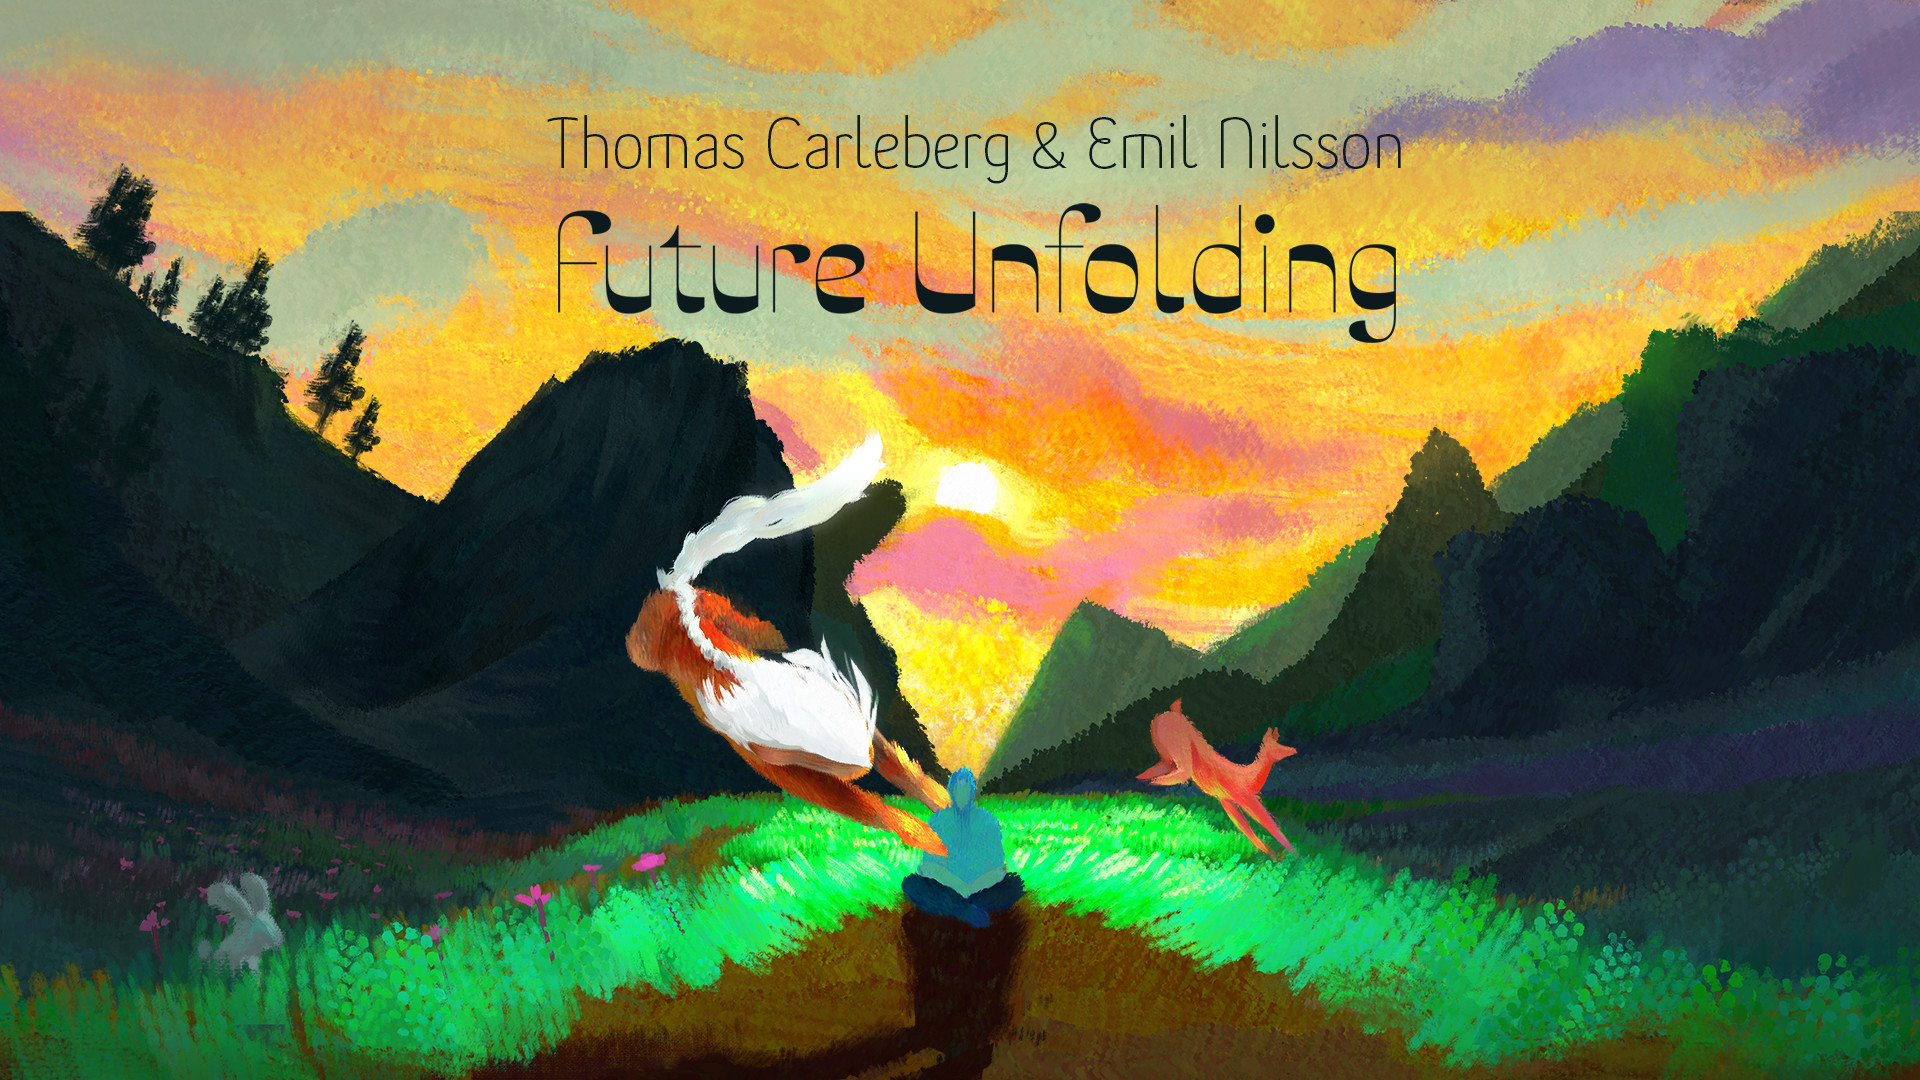 Future Unfolding Original Soundtrack Featured Screenshot #1